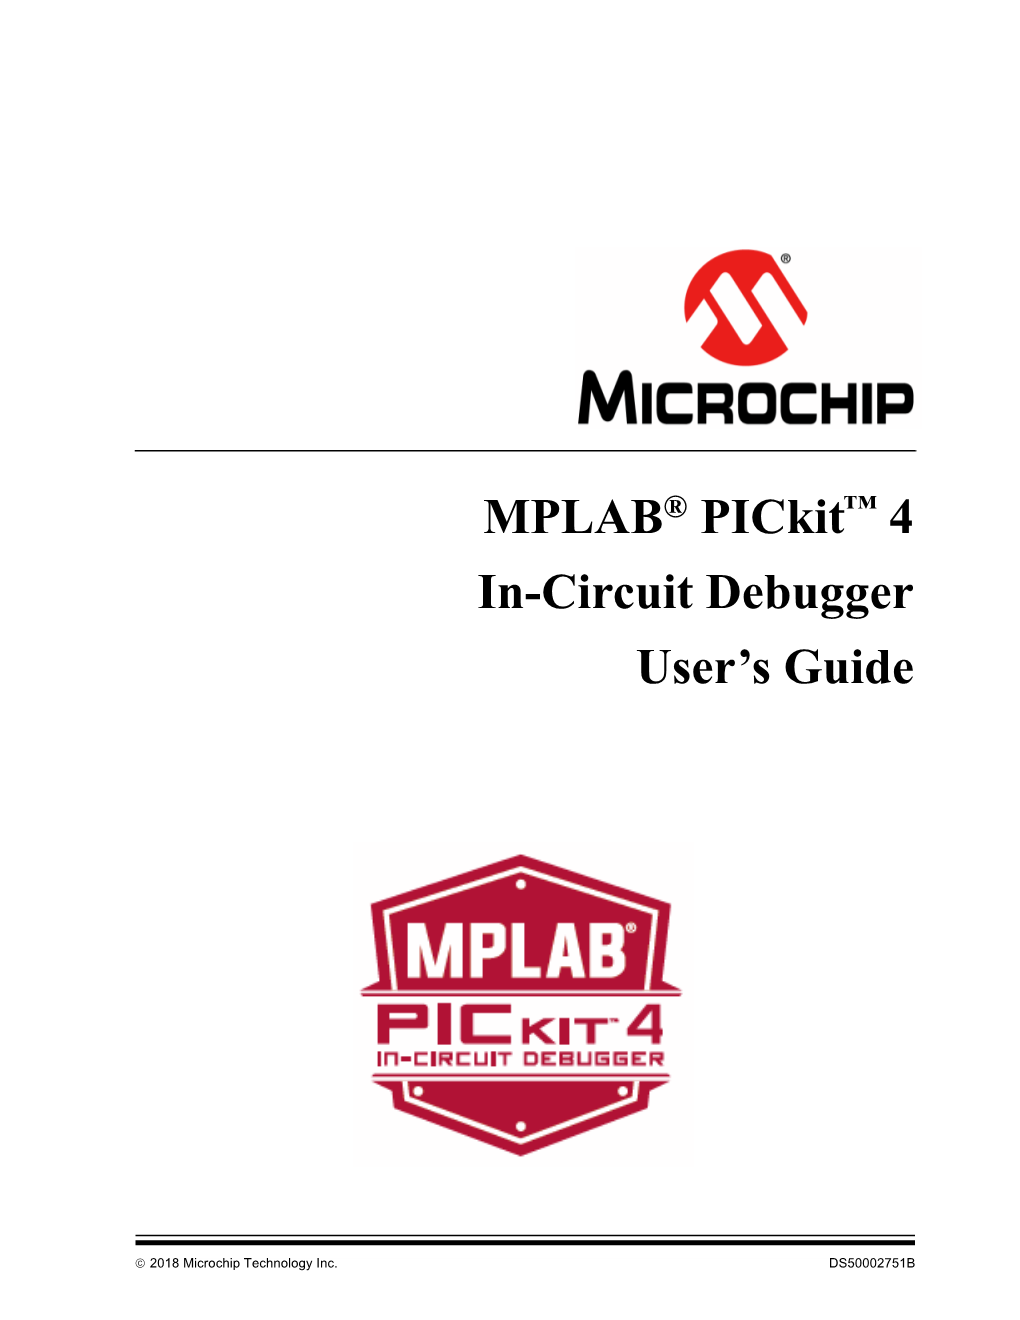 MPLAB Pickit 4 In-Circuit Debugger User's Guide